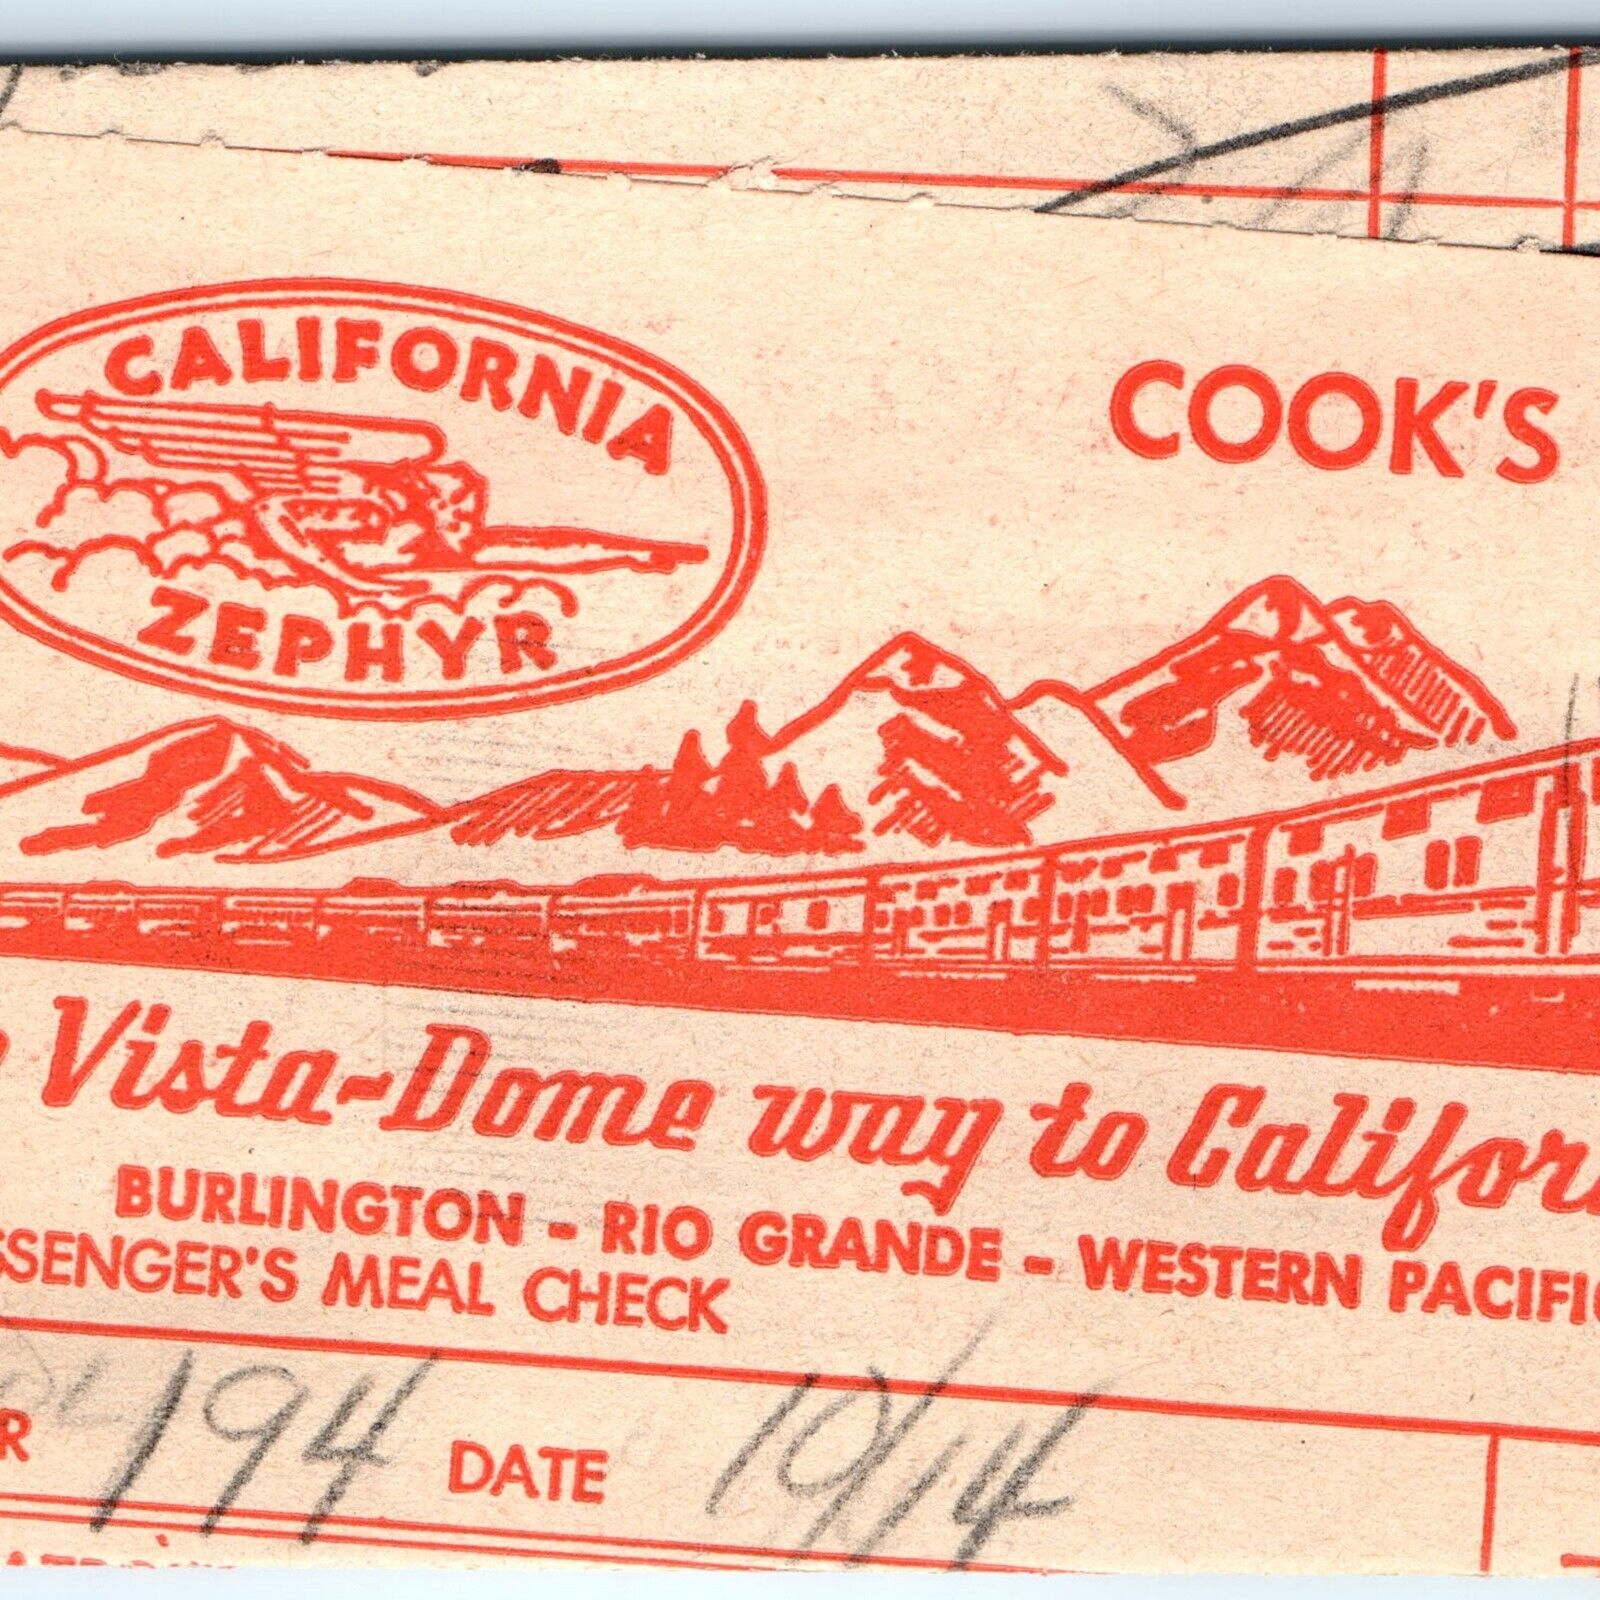 c1940s California Zephyr Train Dining Cooks Check Receipt Vista Dome Railway C39